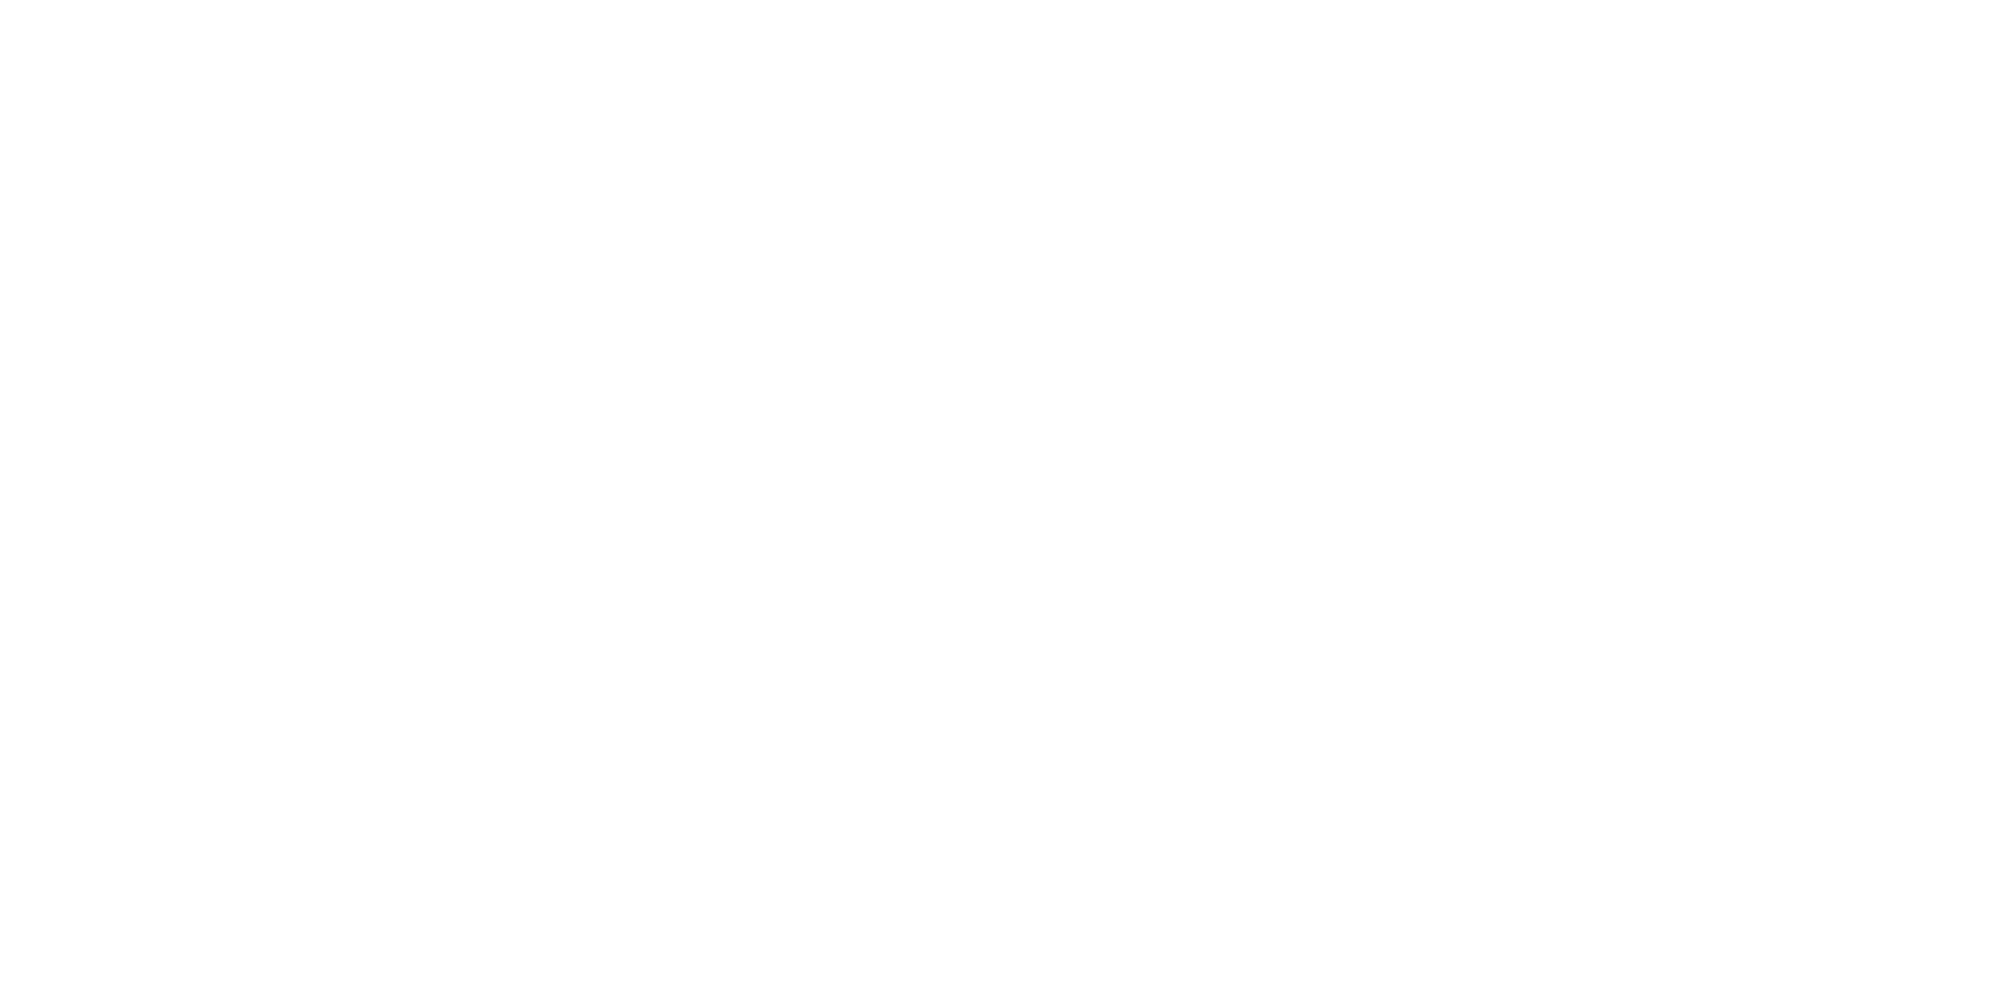 Nehslo Animation Studios Logo